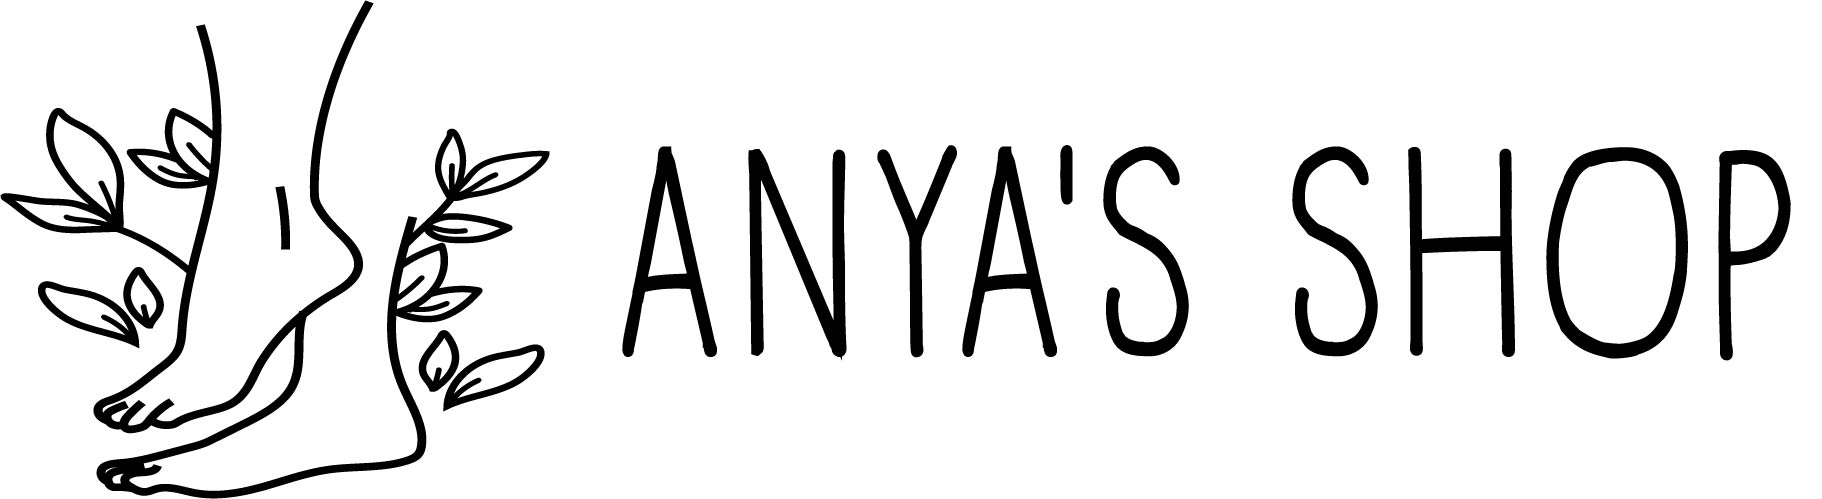 Anya's Shop